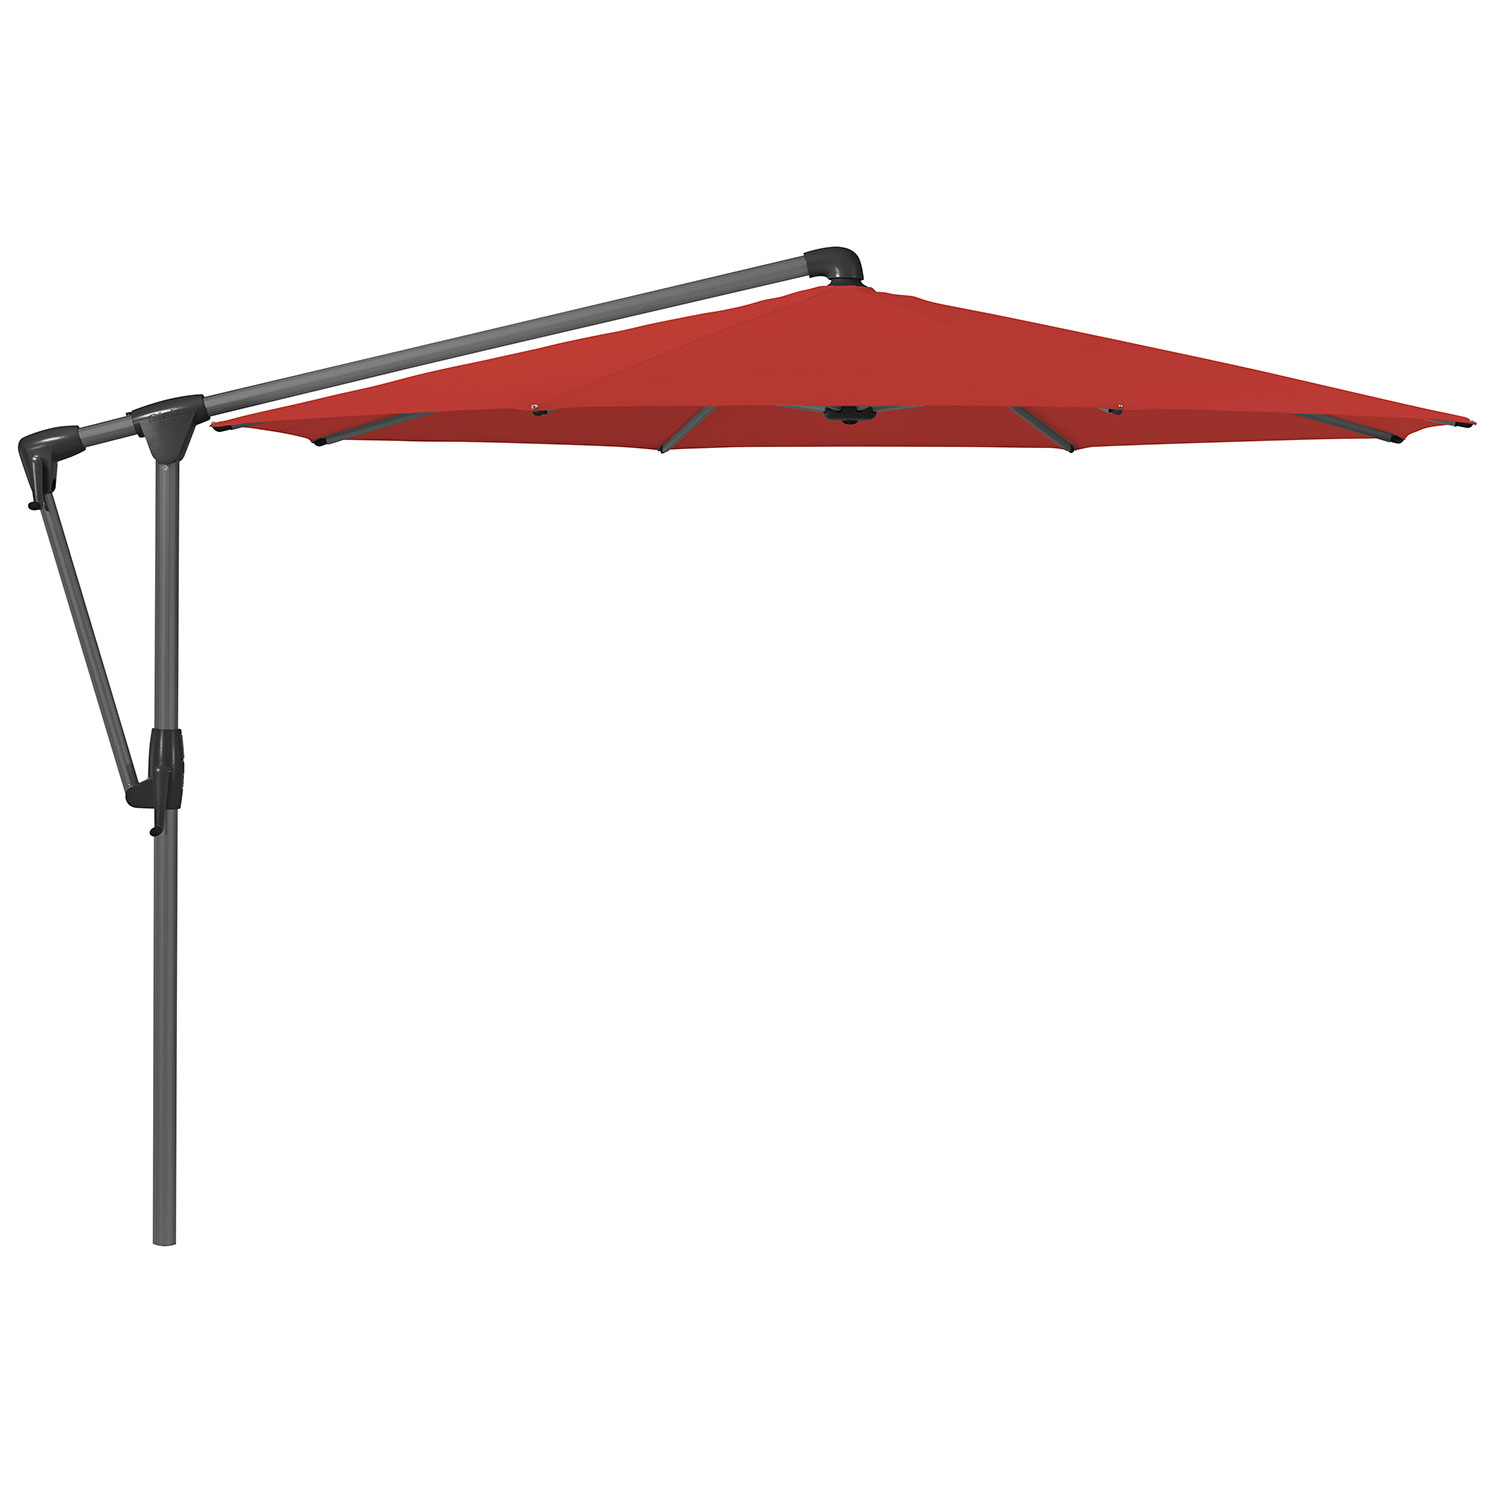 Sunwing Casa frihängande parasoll 330 cm kat.4 antracite alu / 403 carmine